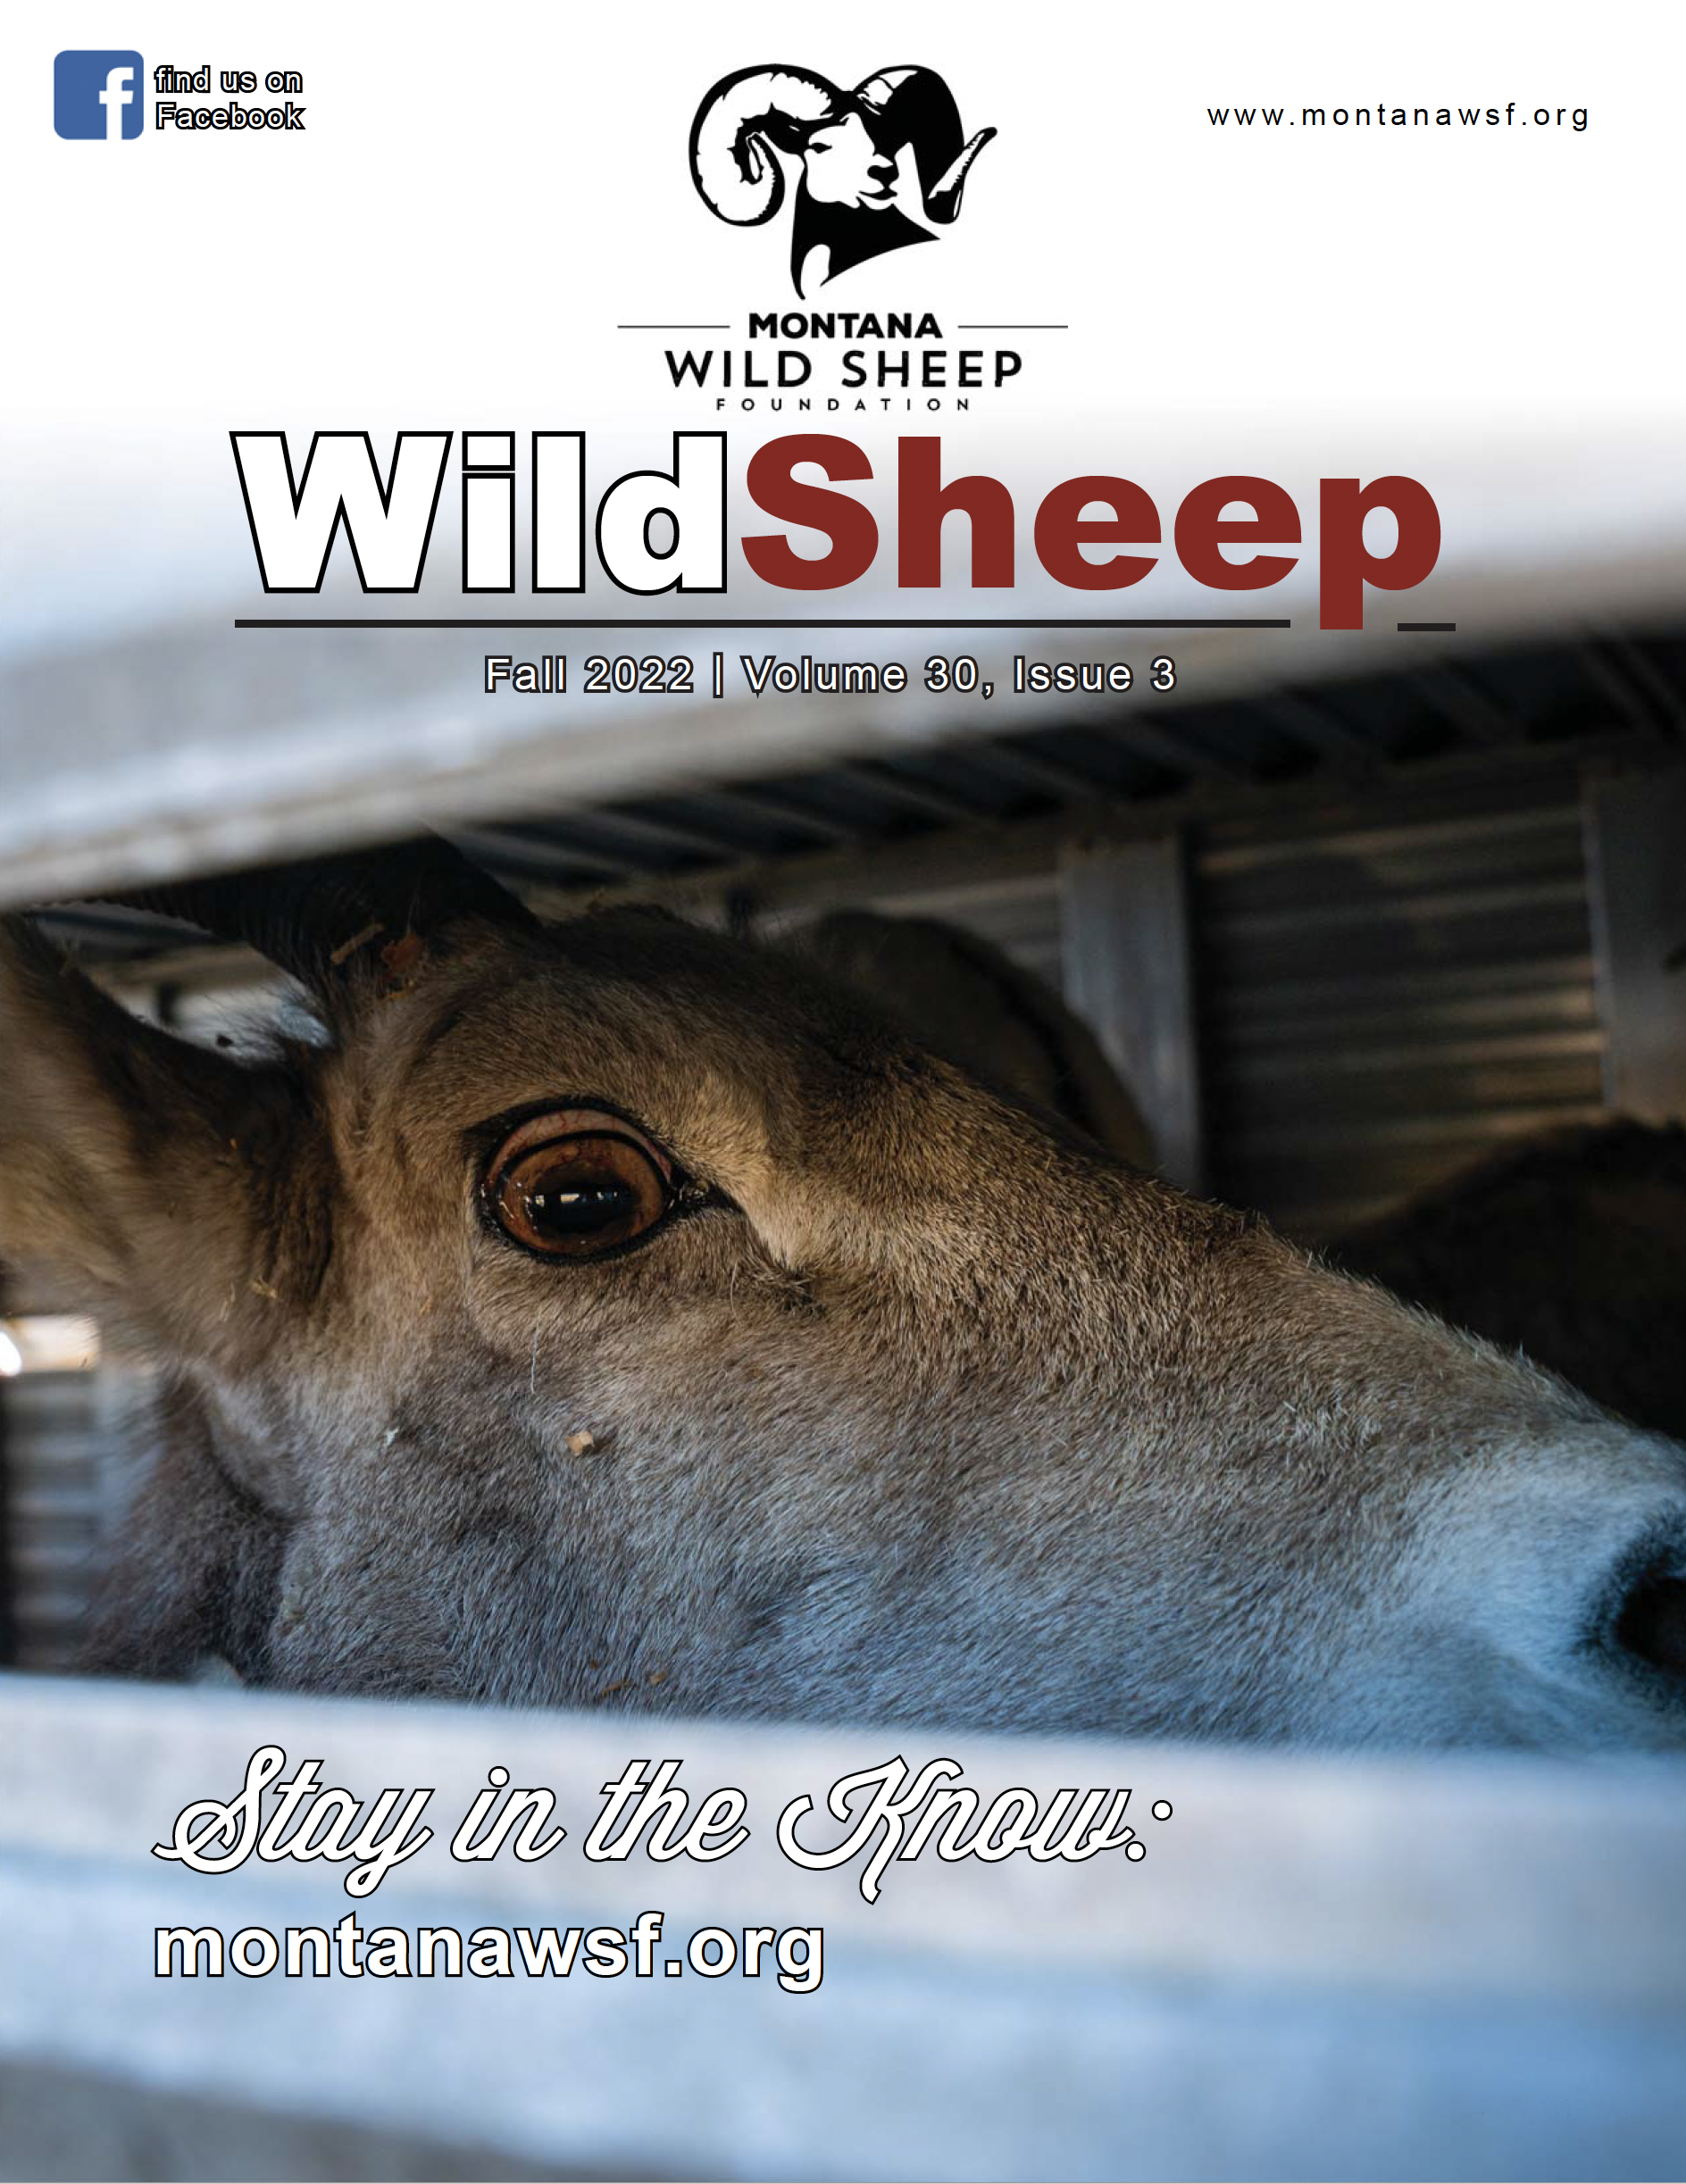 Montana Wild Sheep Foundation Newsletter